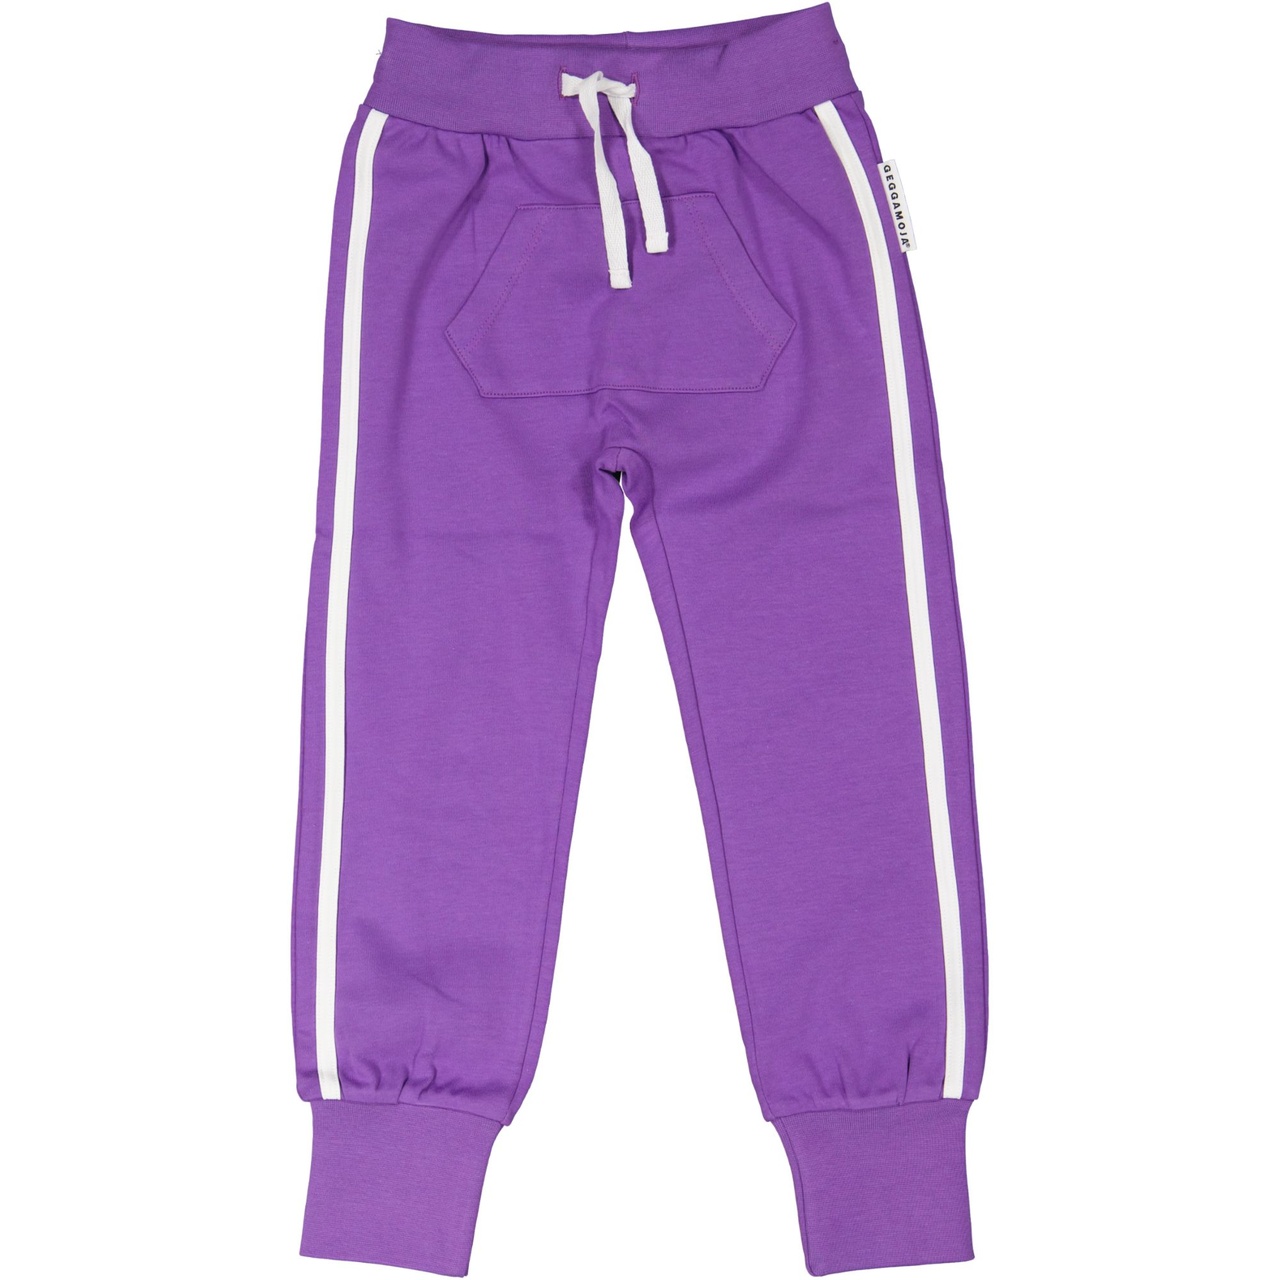 Sweat pants Purple 05 134/140